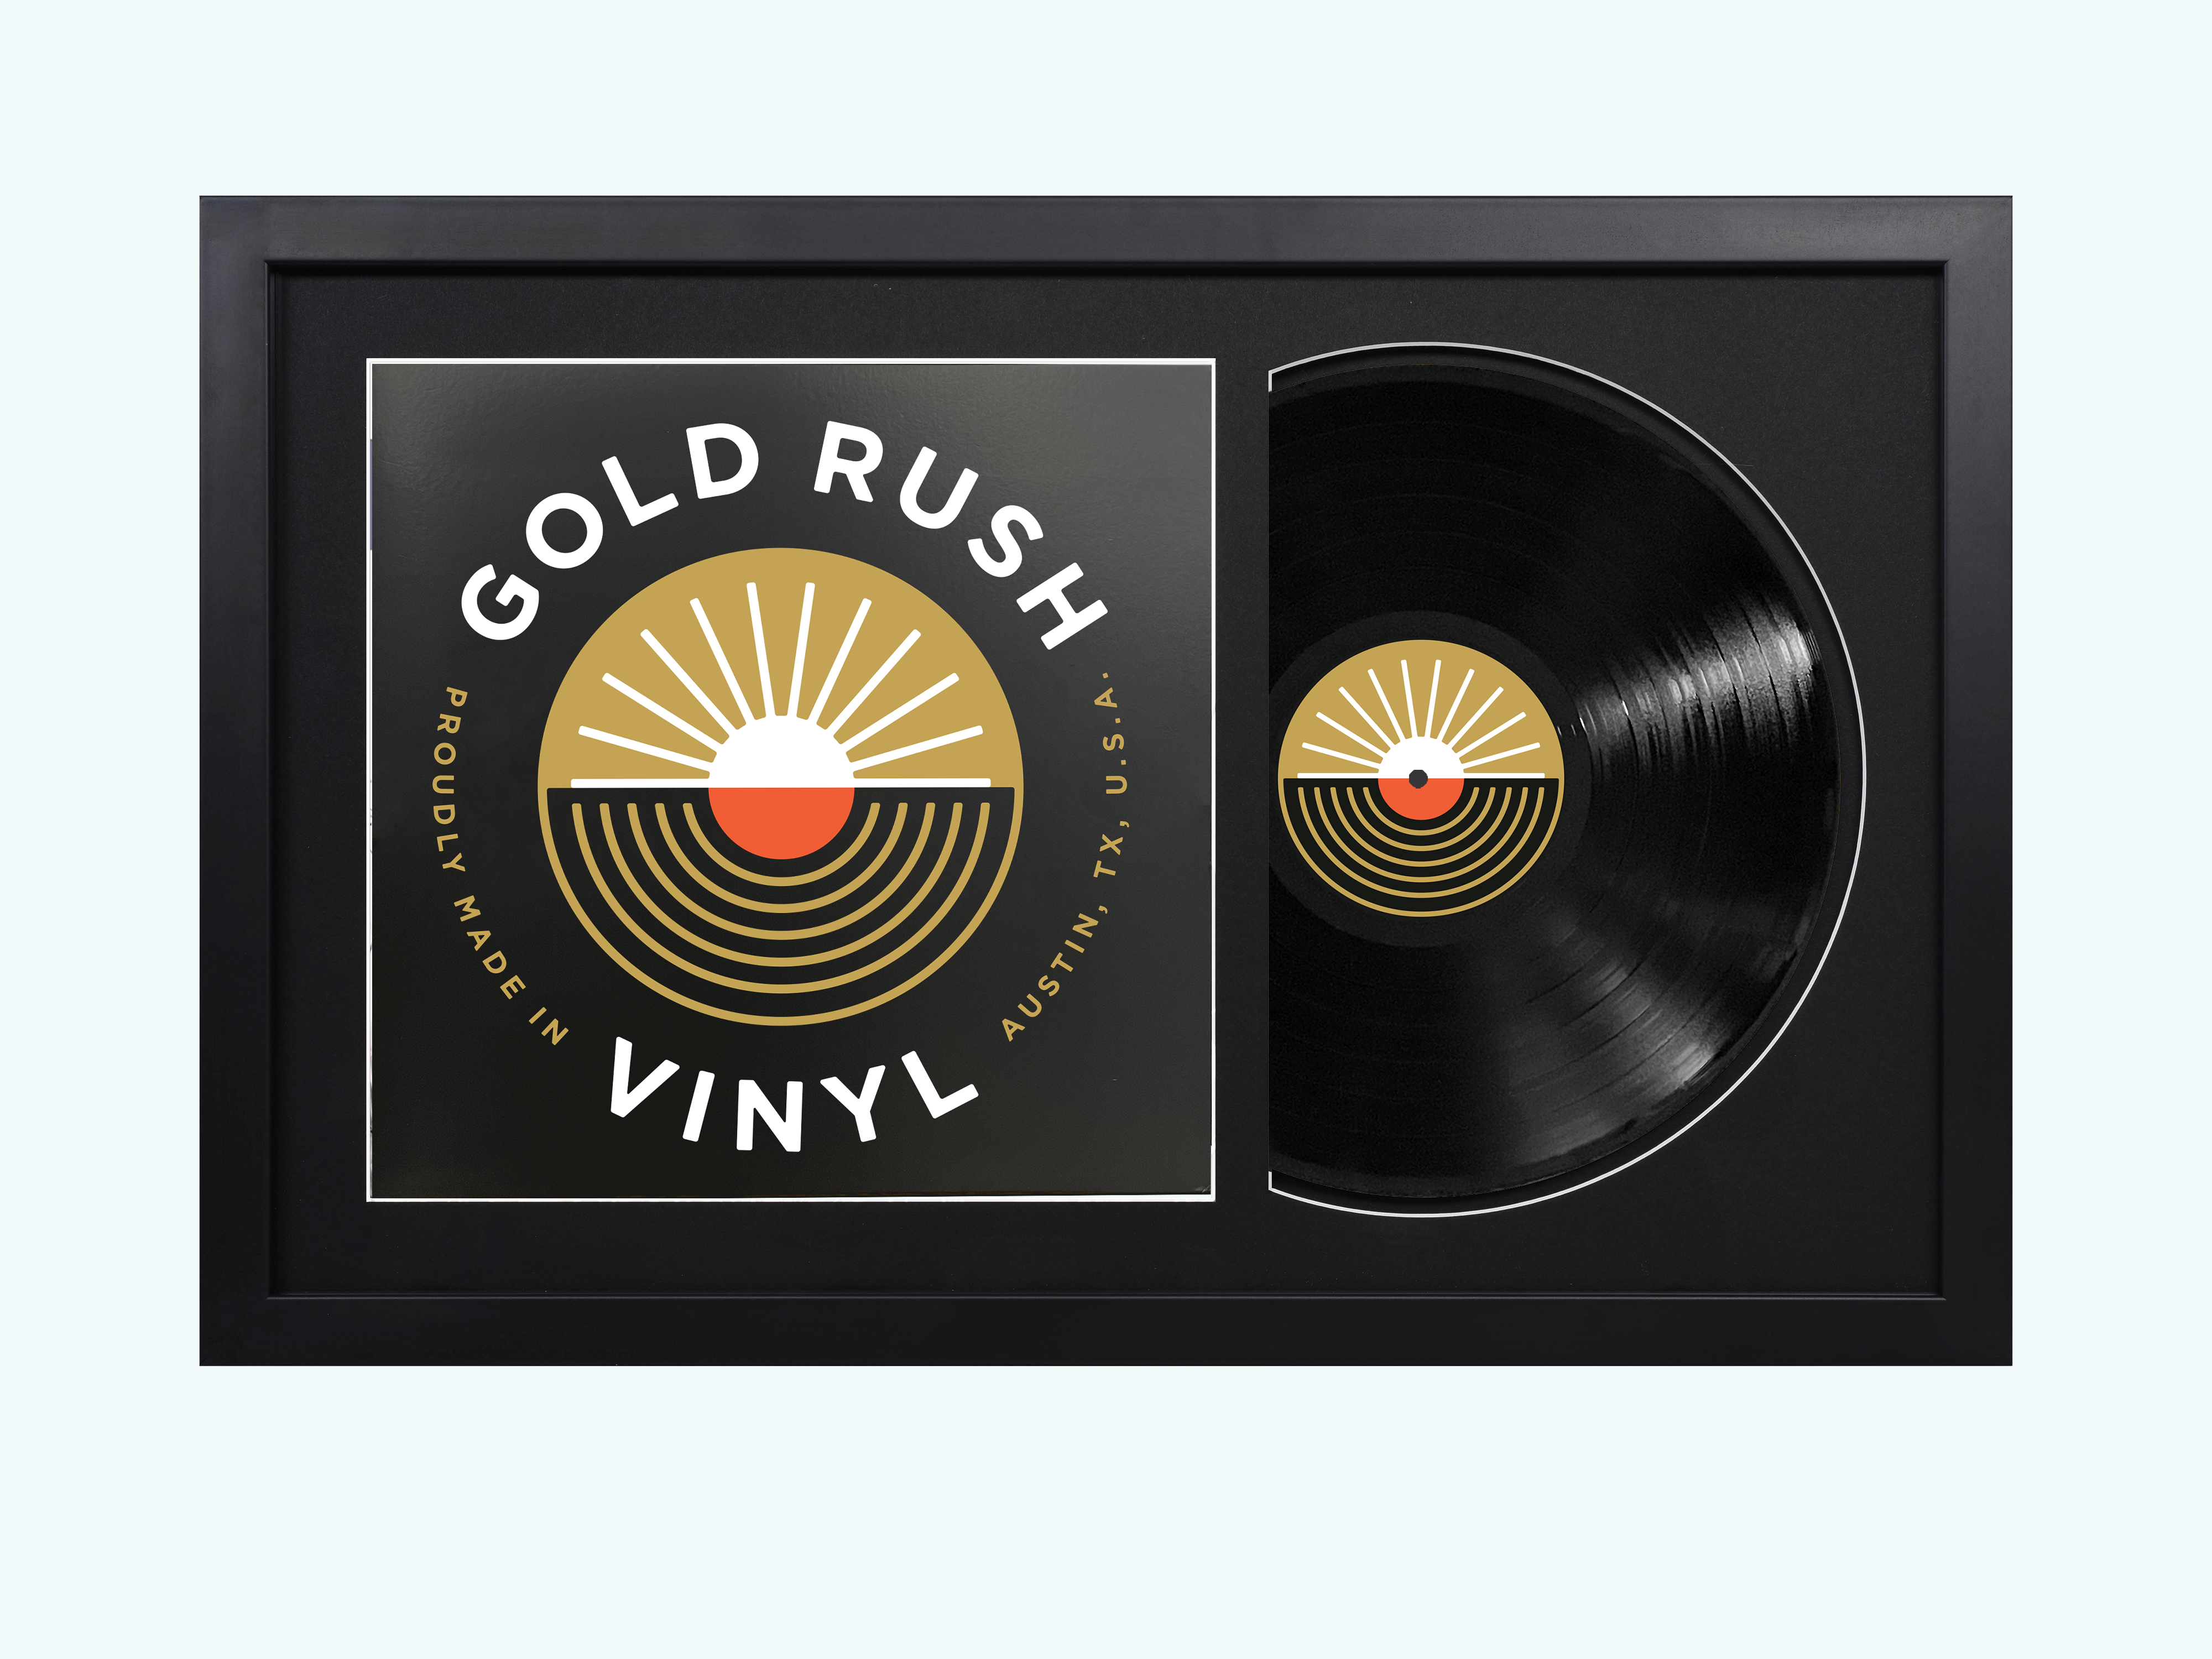 Vinyl of the Month Club promises 'Golden Era' record